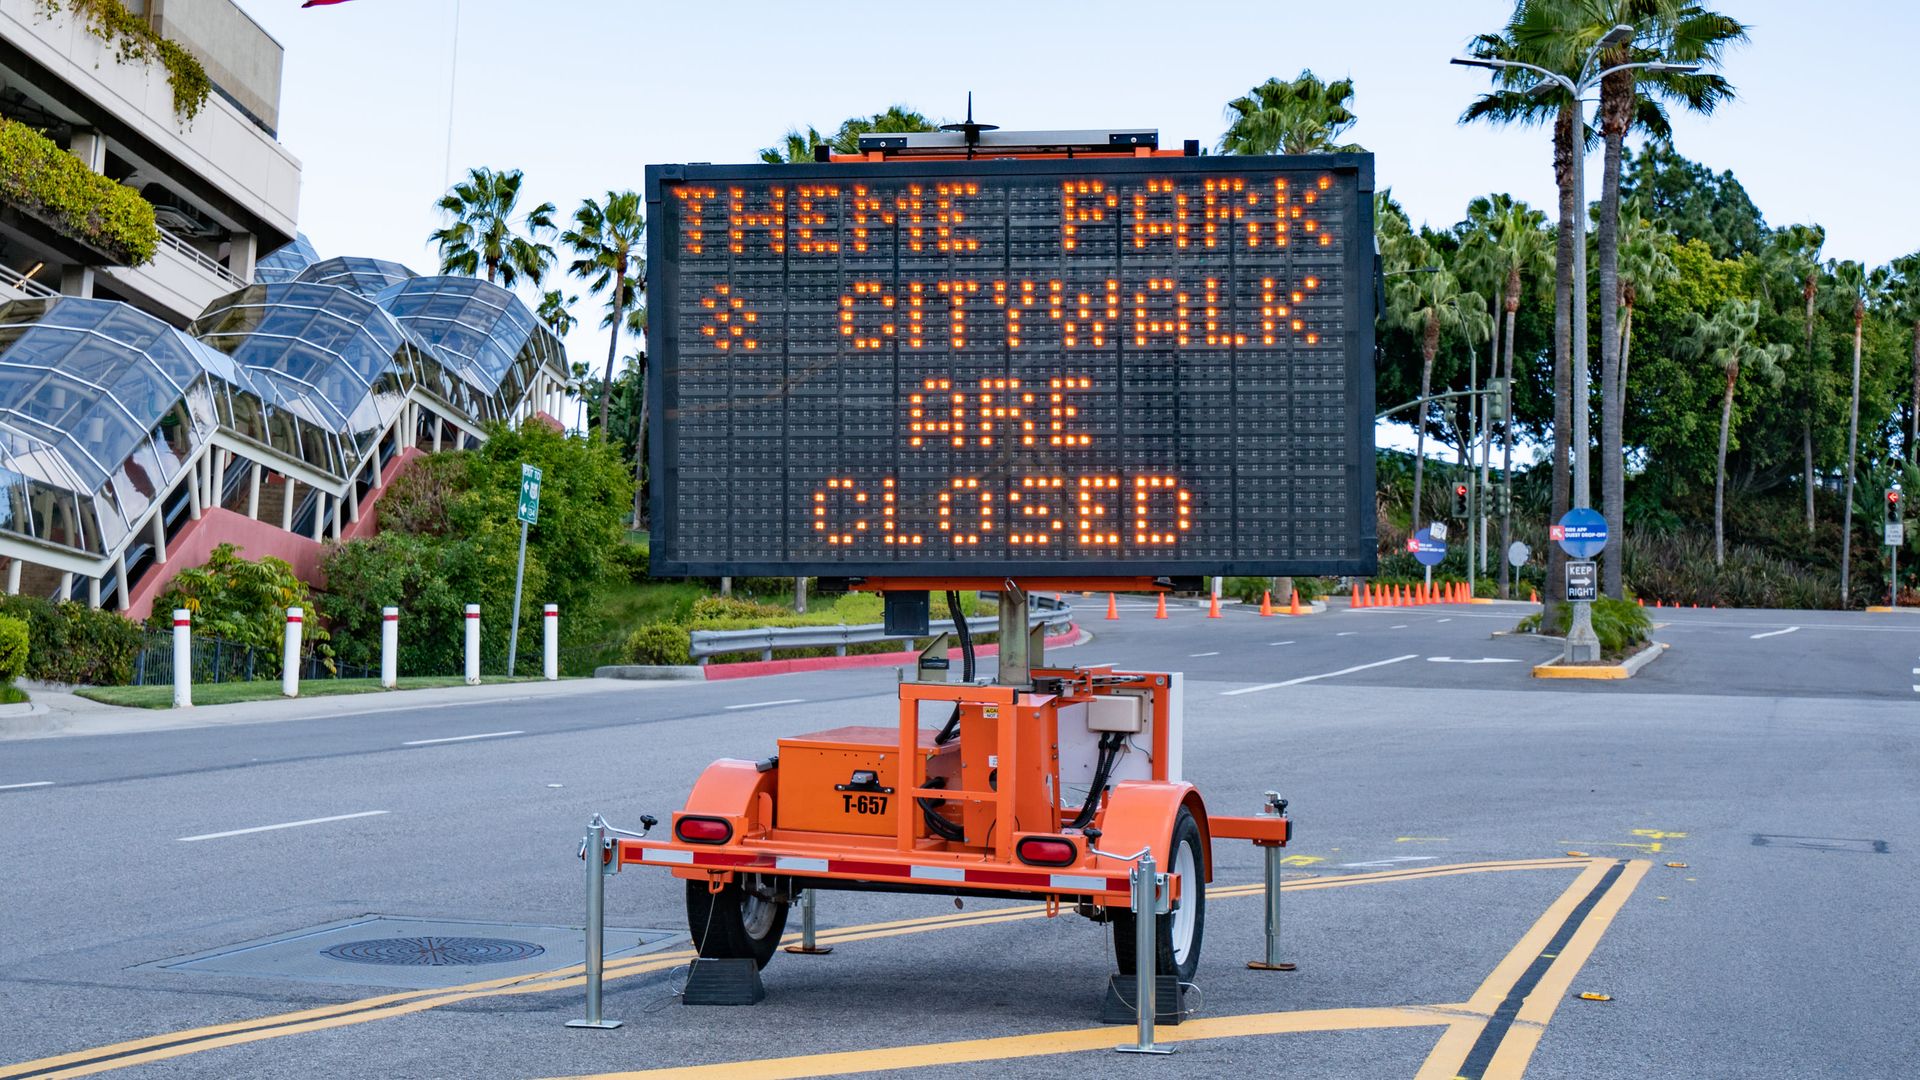 Theme park closed sign